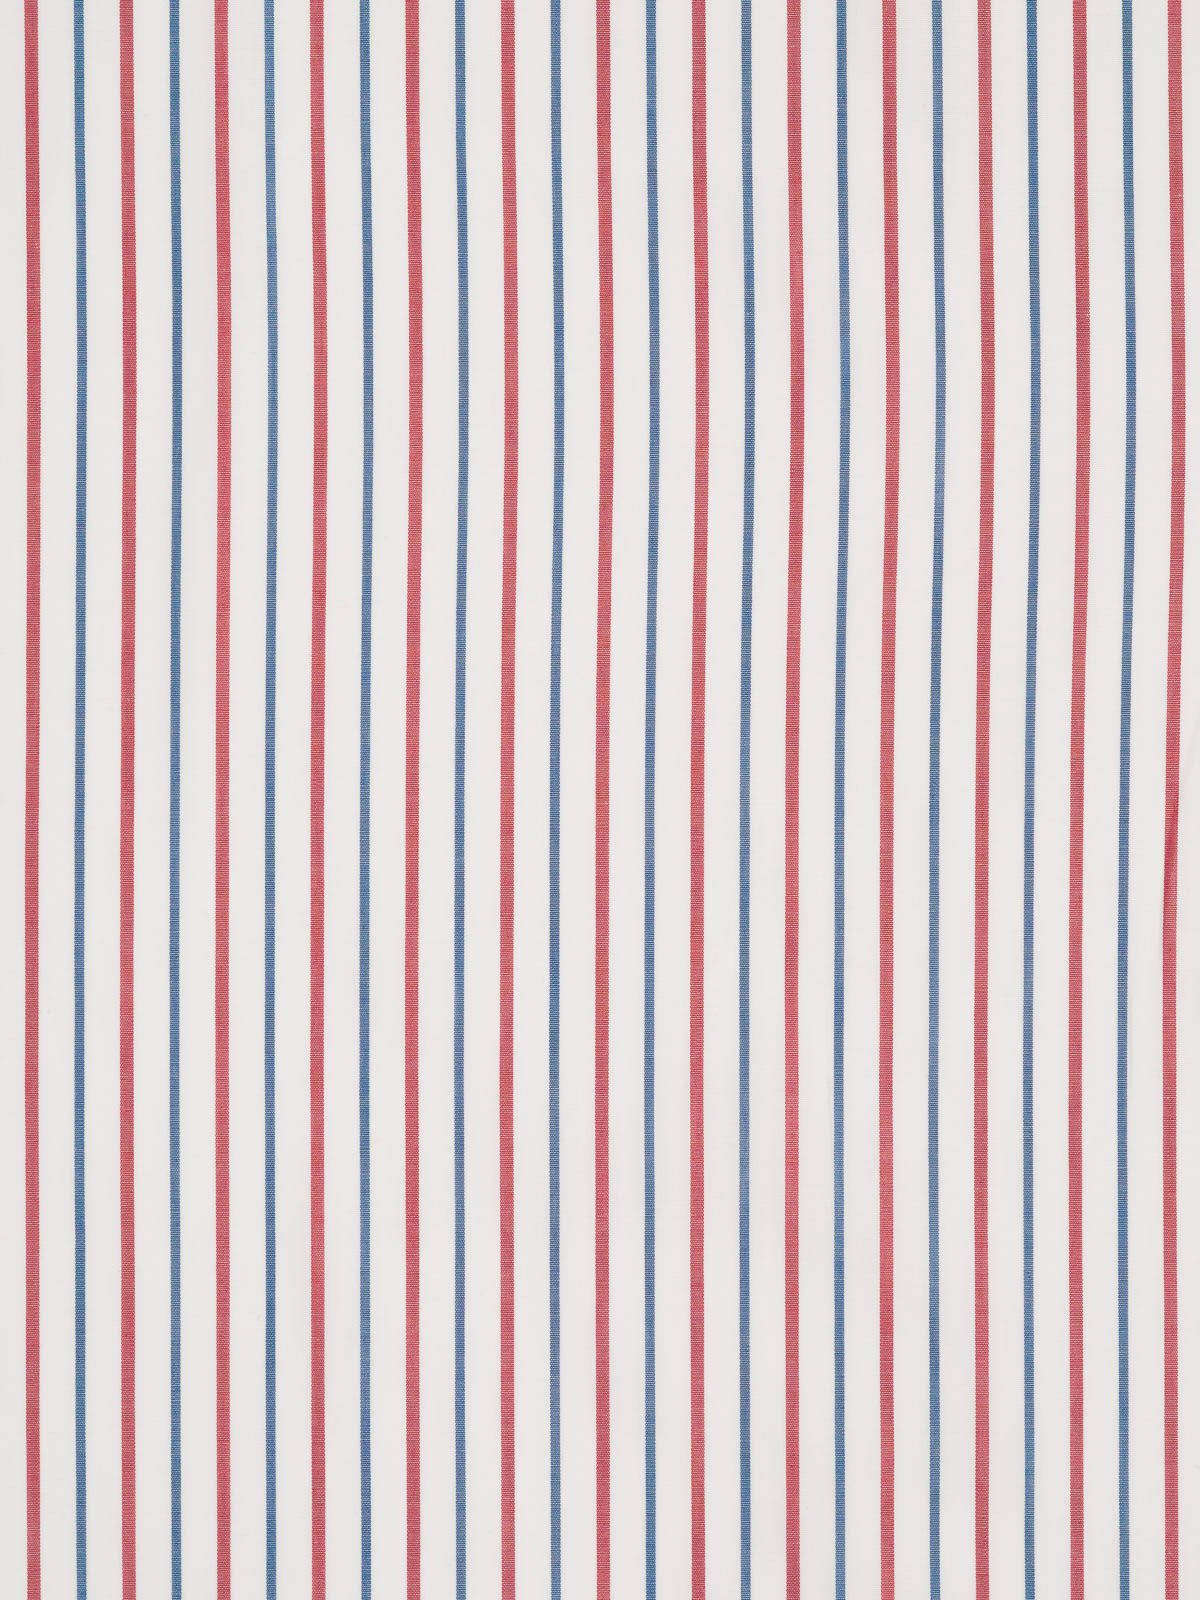 Pencil Stripe Pattern